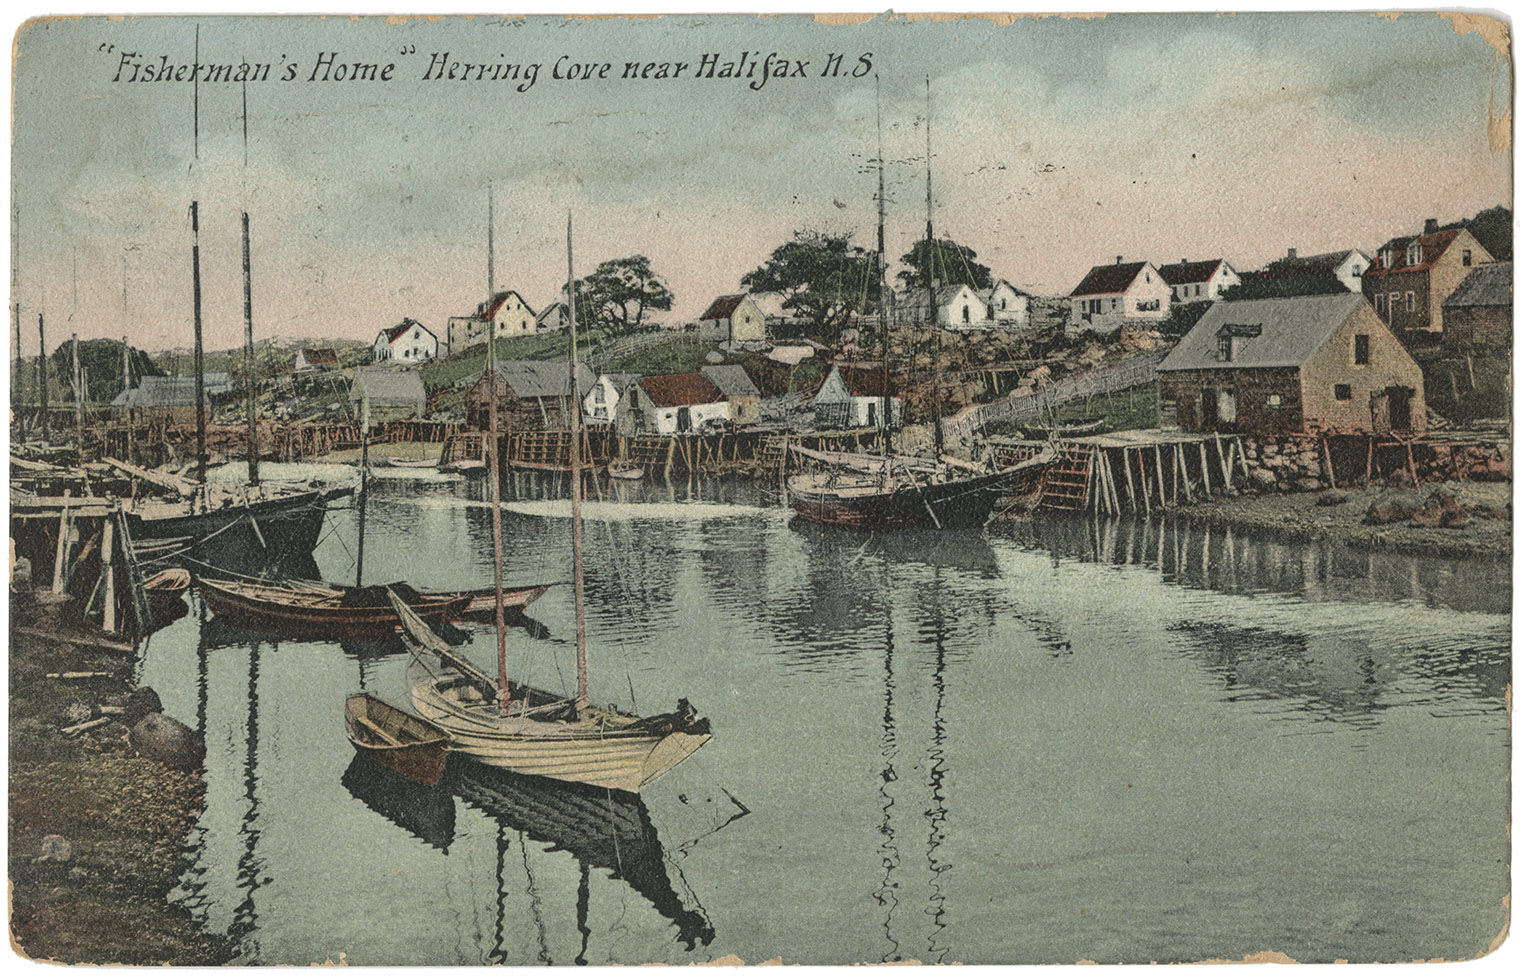 communityalbums - “Fisherman’s Home” Herring Cove near Halifax, N.S.